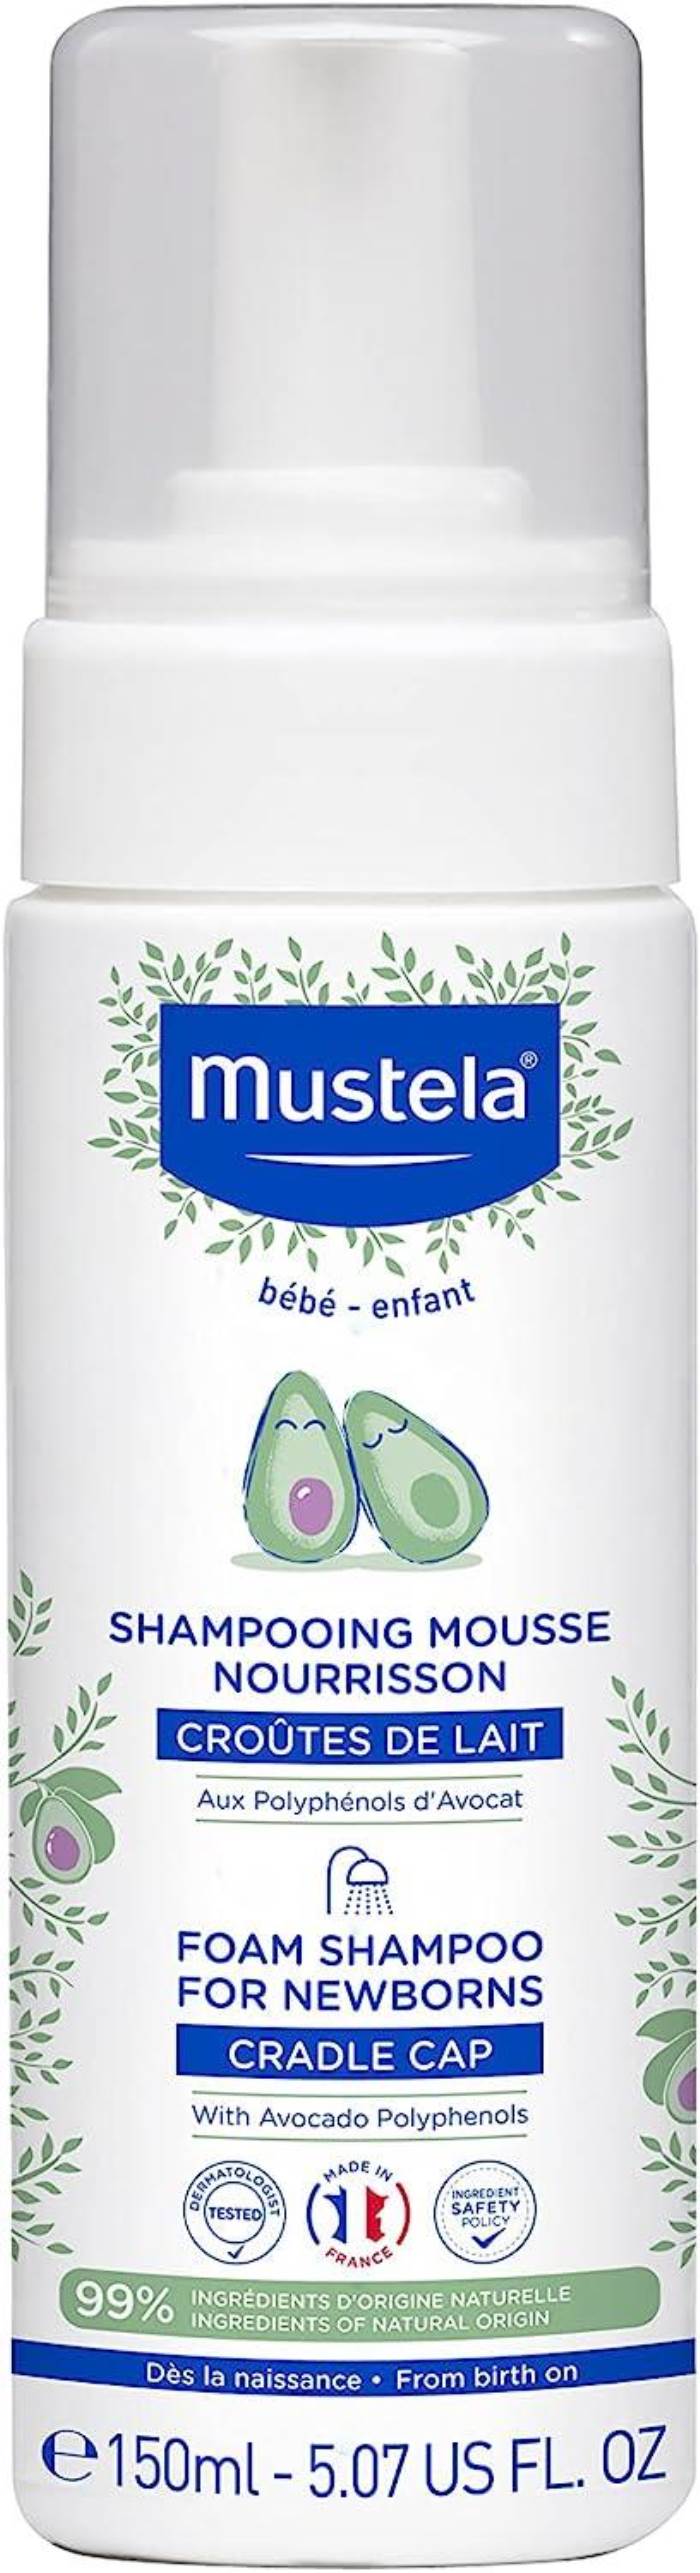 Mustela Cradle Cap Foam Shampoo for Newborn - Baby Shampoo with Natural Avocado - Tear-Free & Fragrance-Free - 150ml